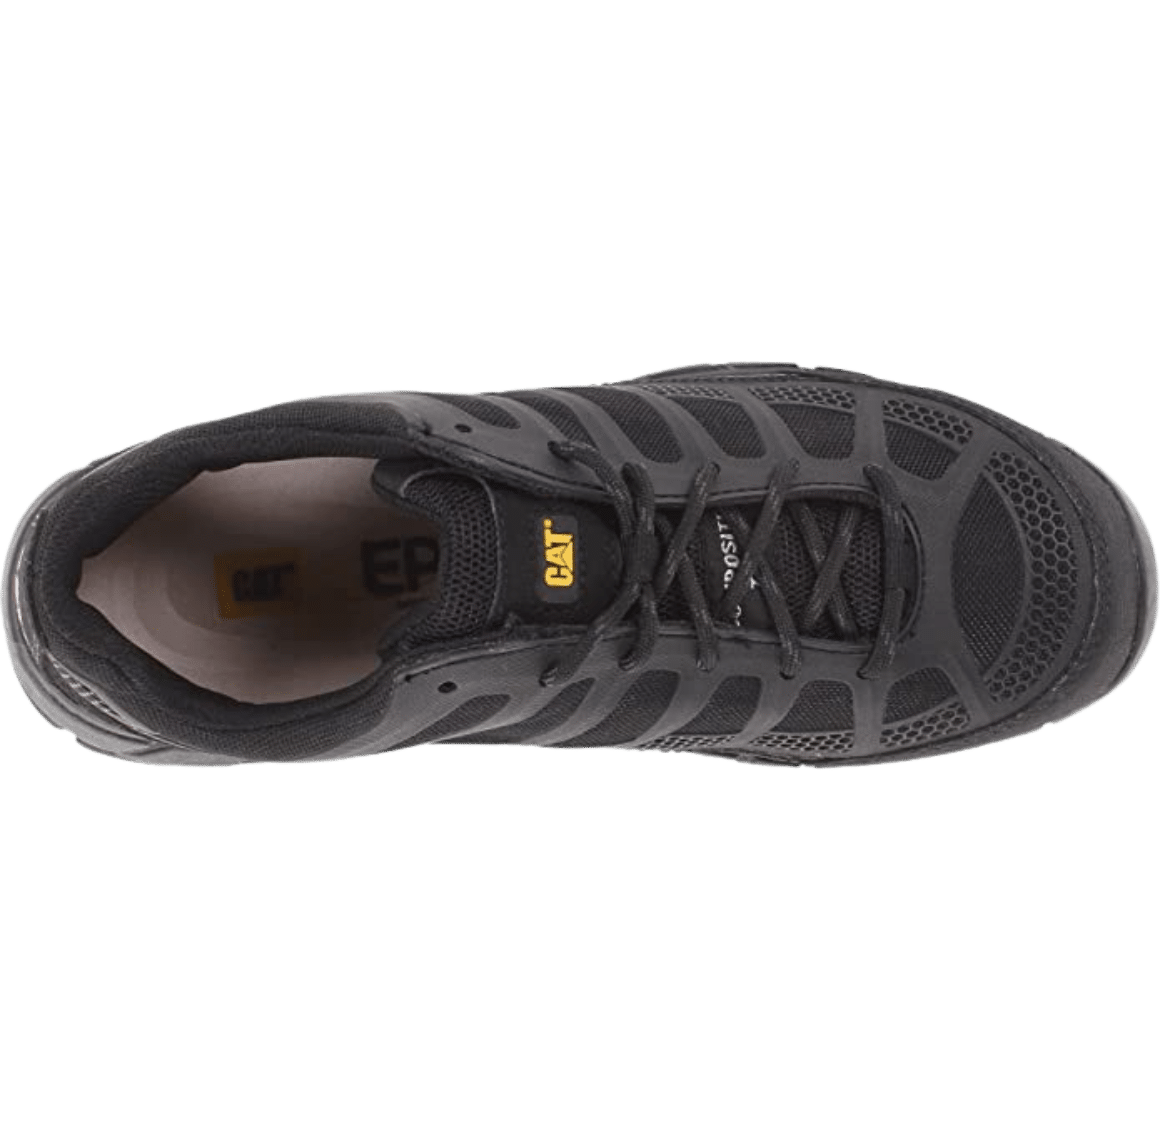 Caterpillar Streamline Composite Toe Safety Shoe